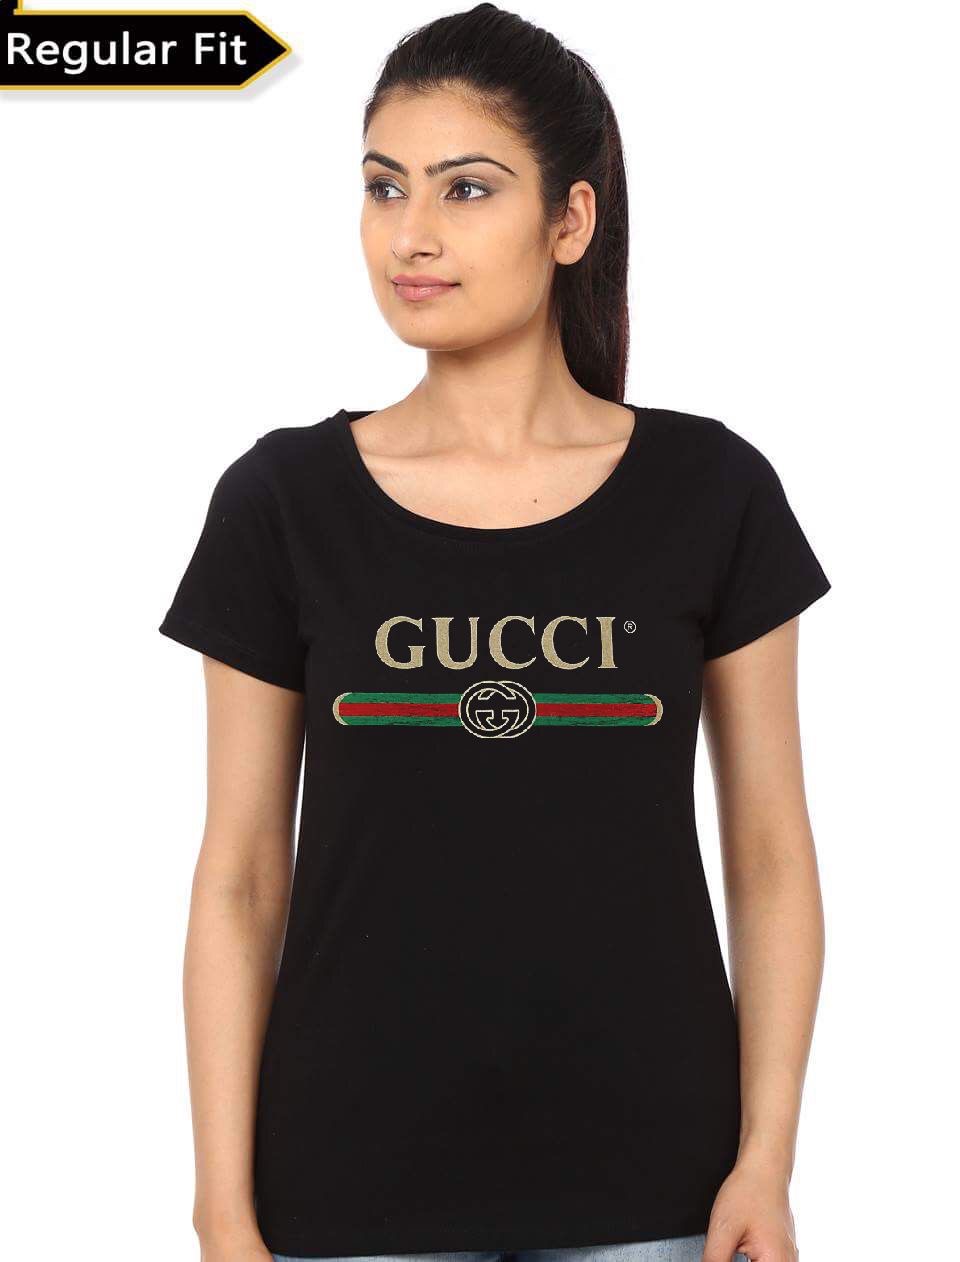 black gucci t shirt women's